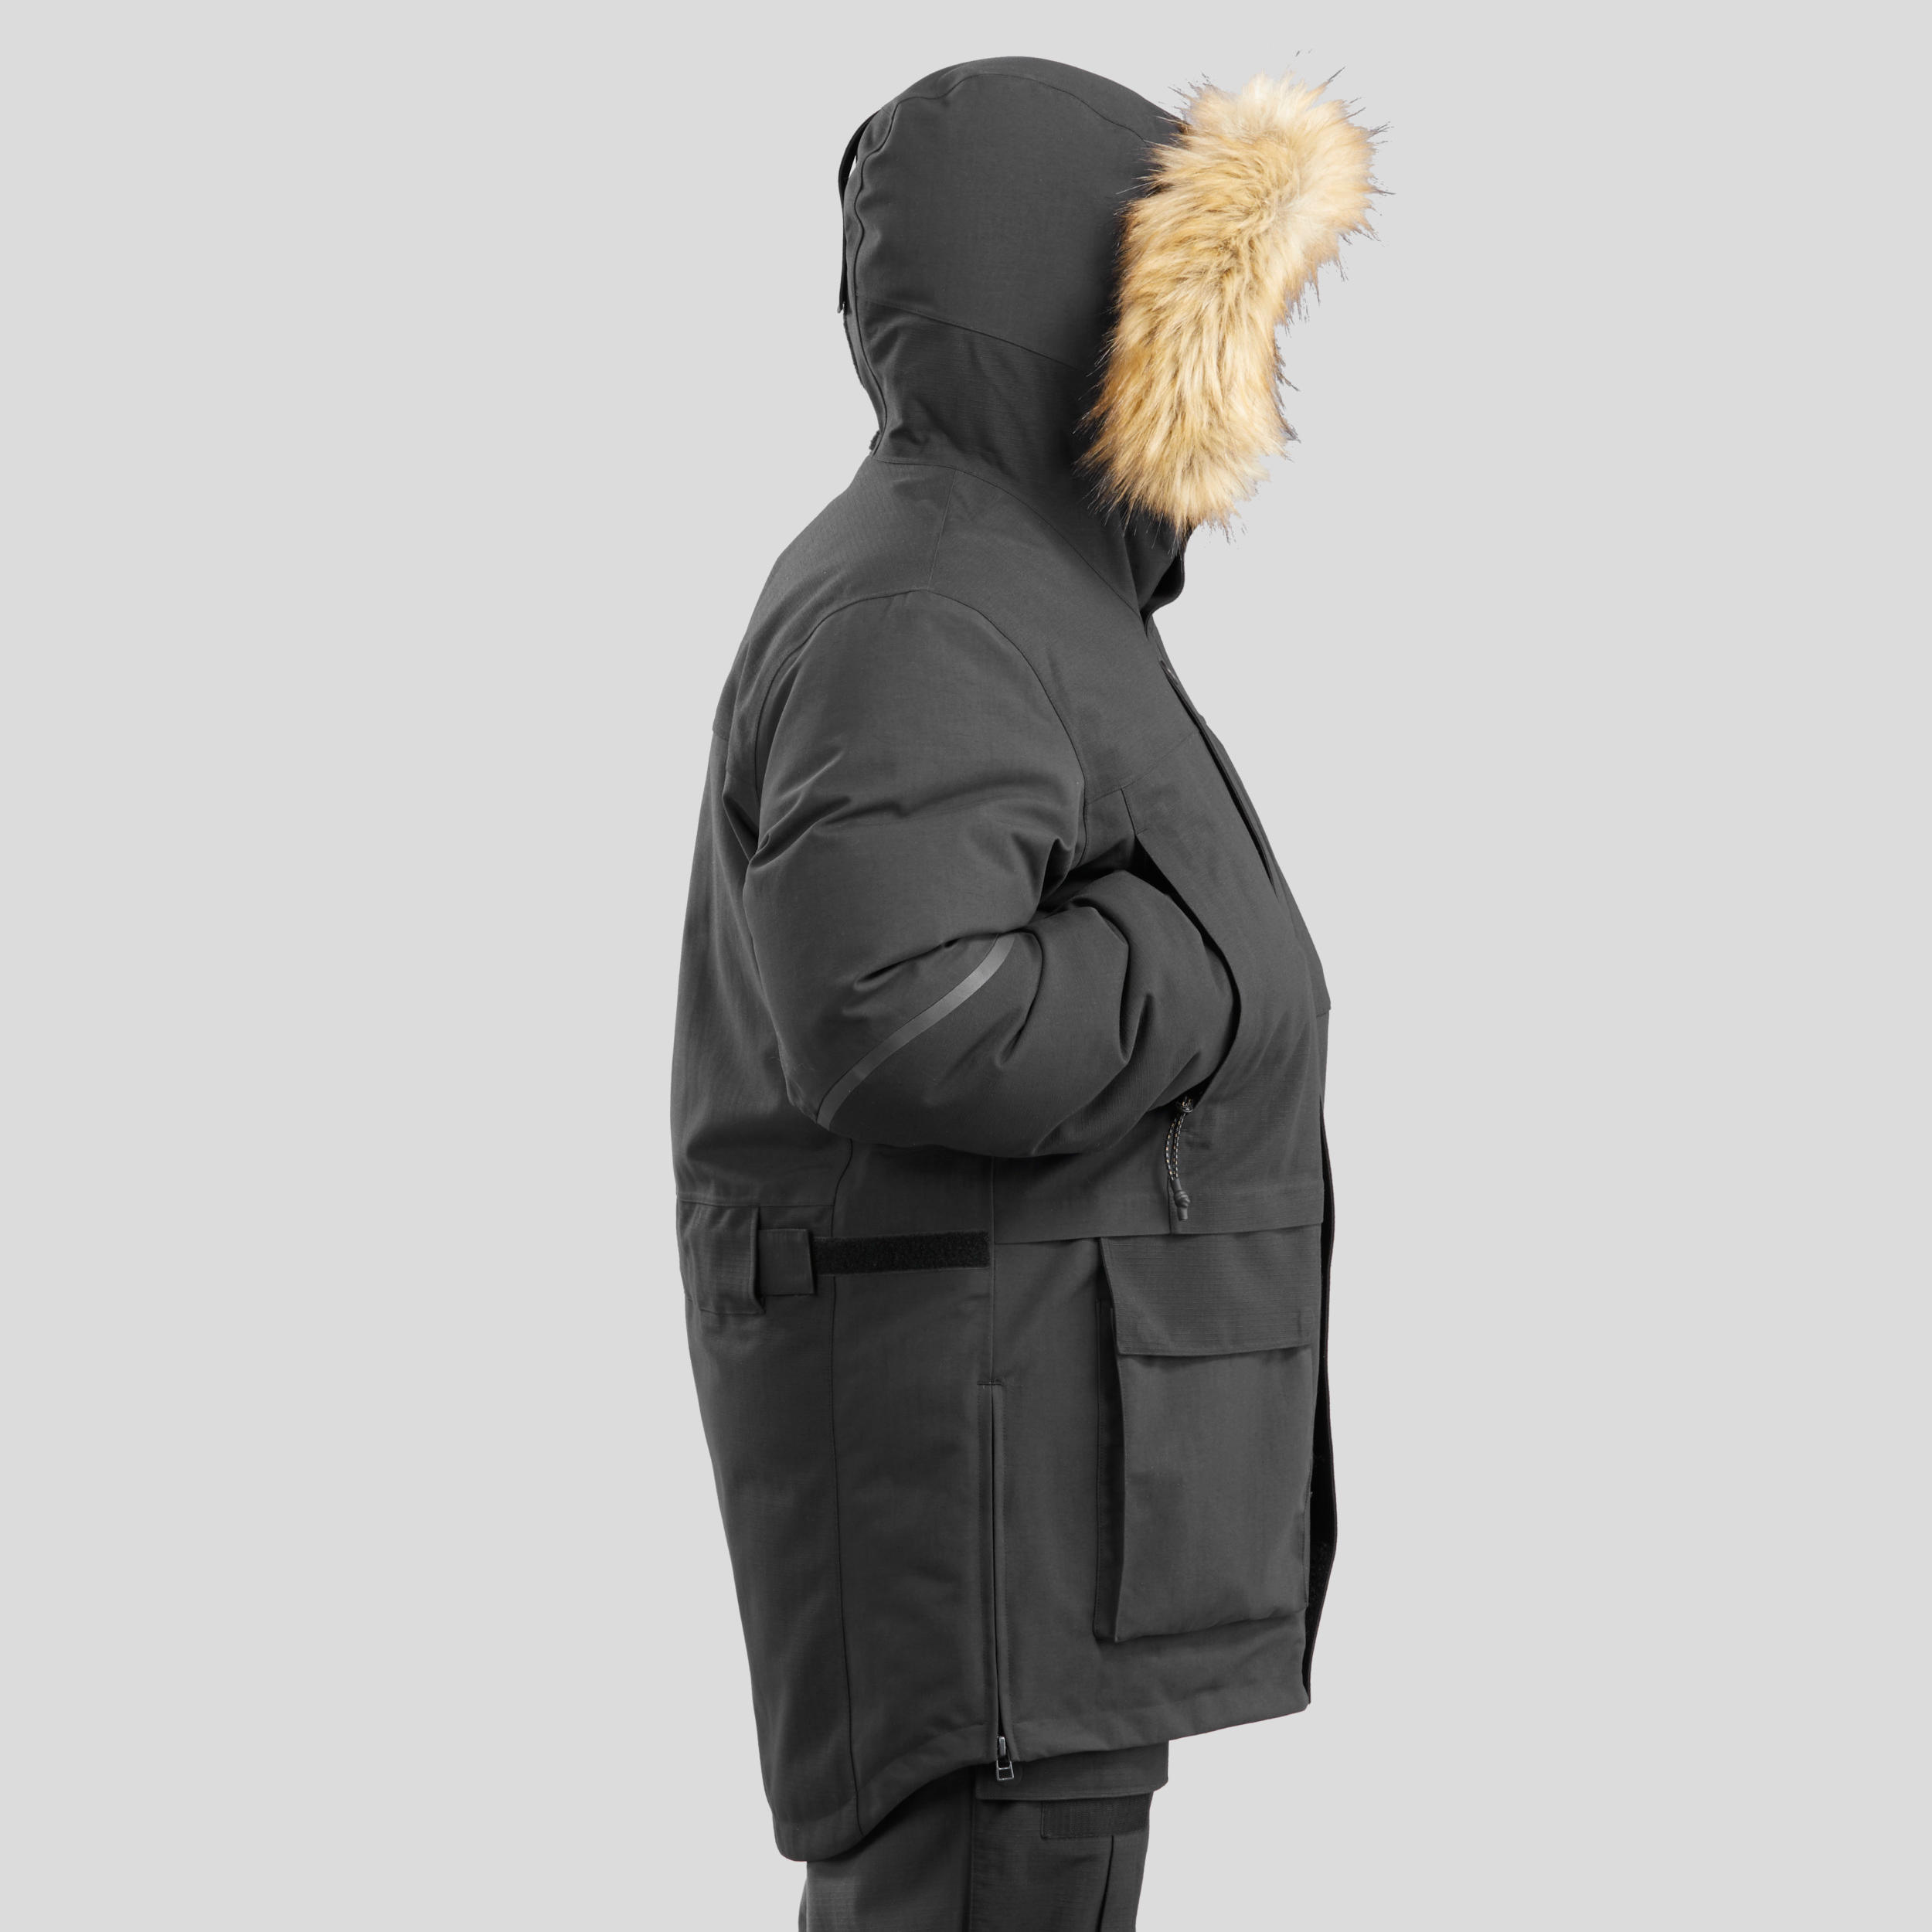 Unisex waterproof parka jacket - 900 - Black 3/21